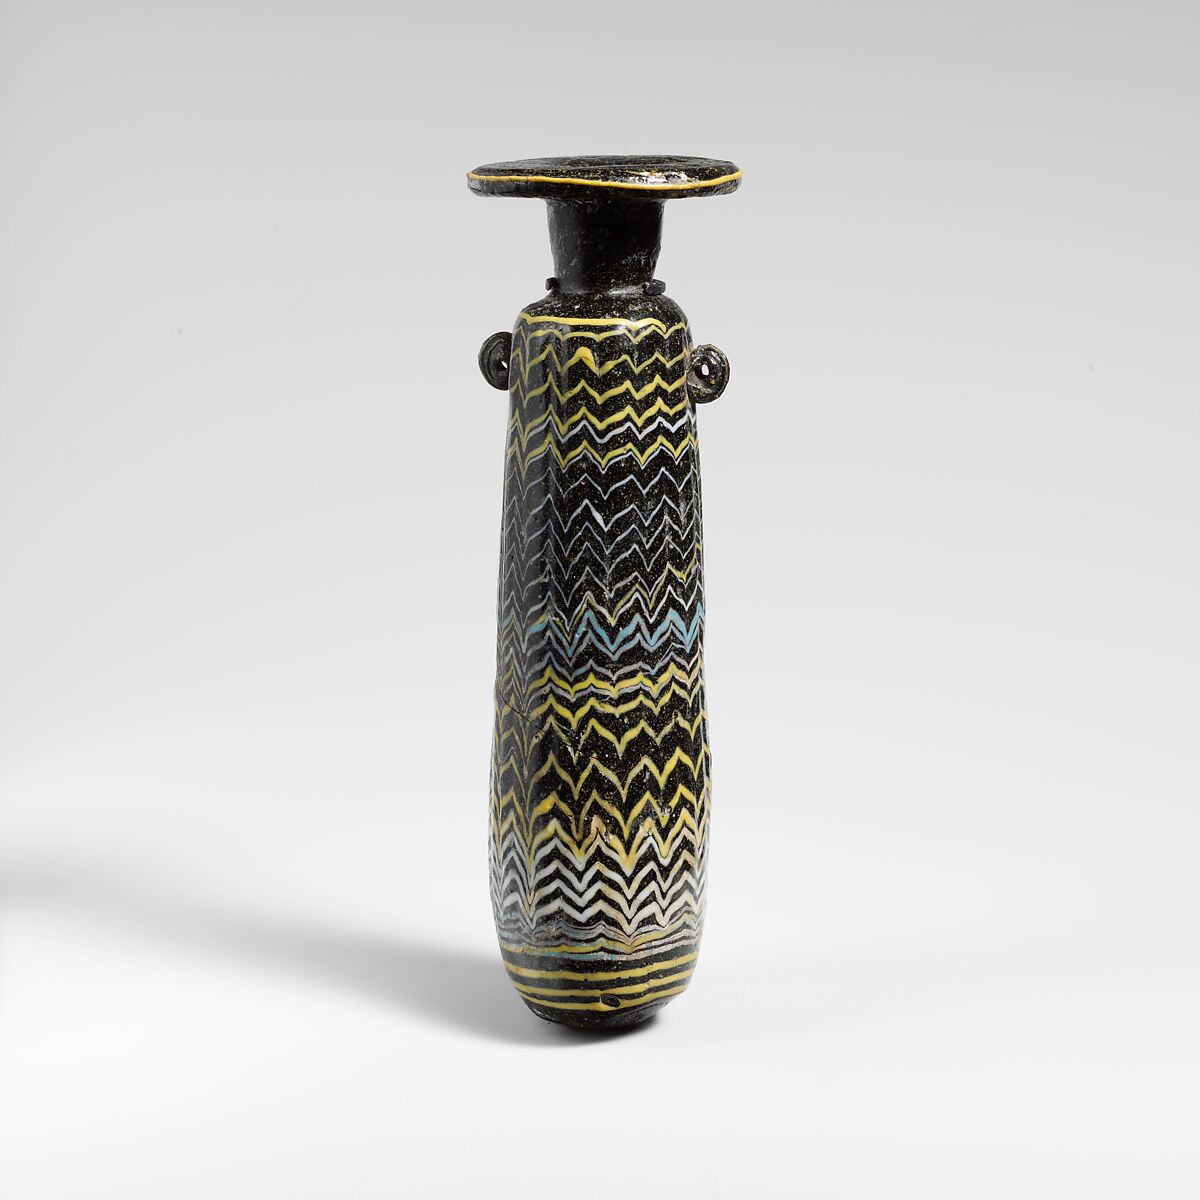 Glass alabastron (perfume bottle), Glass, Eastern Mediterranean or Italian 